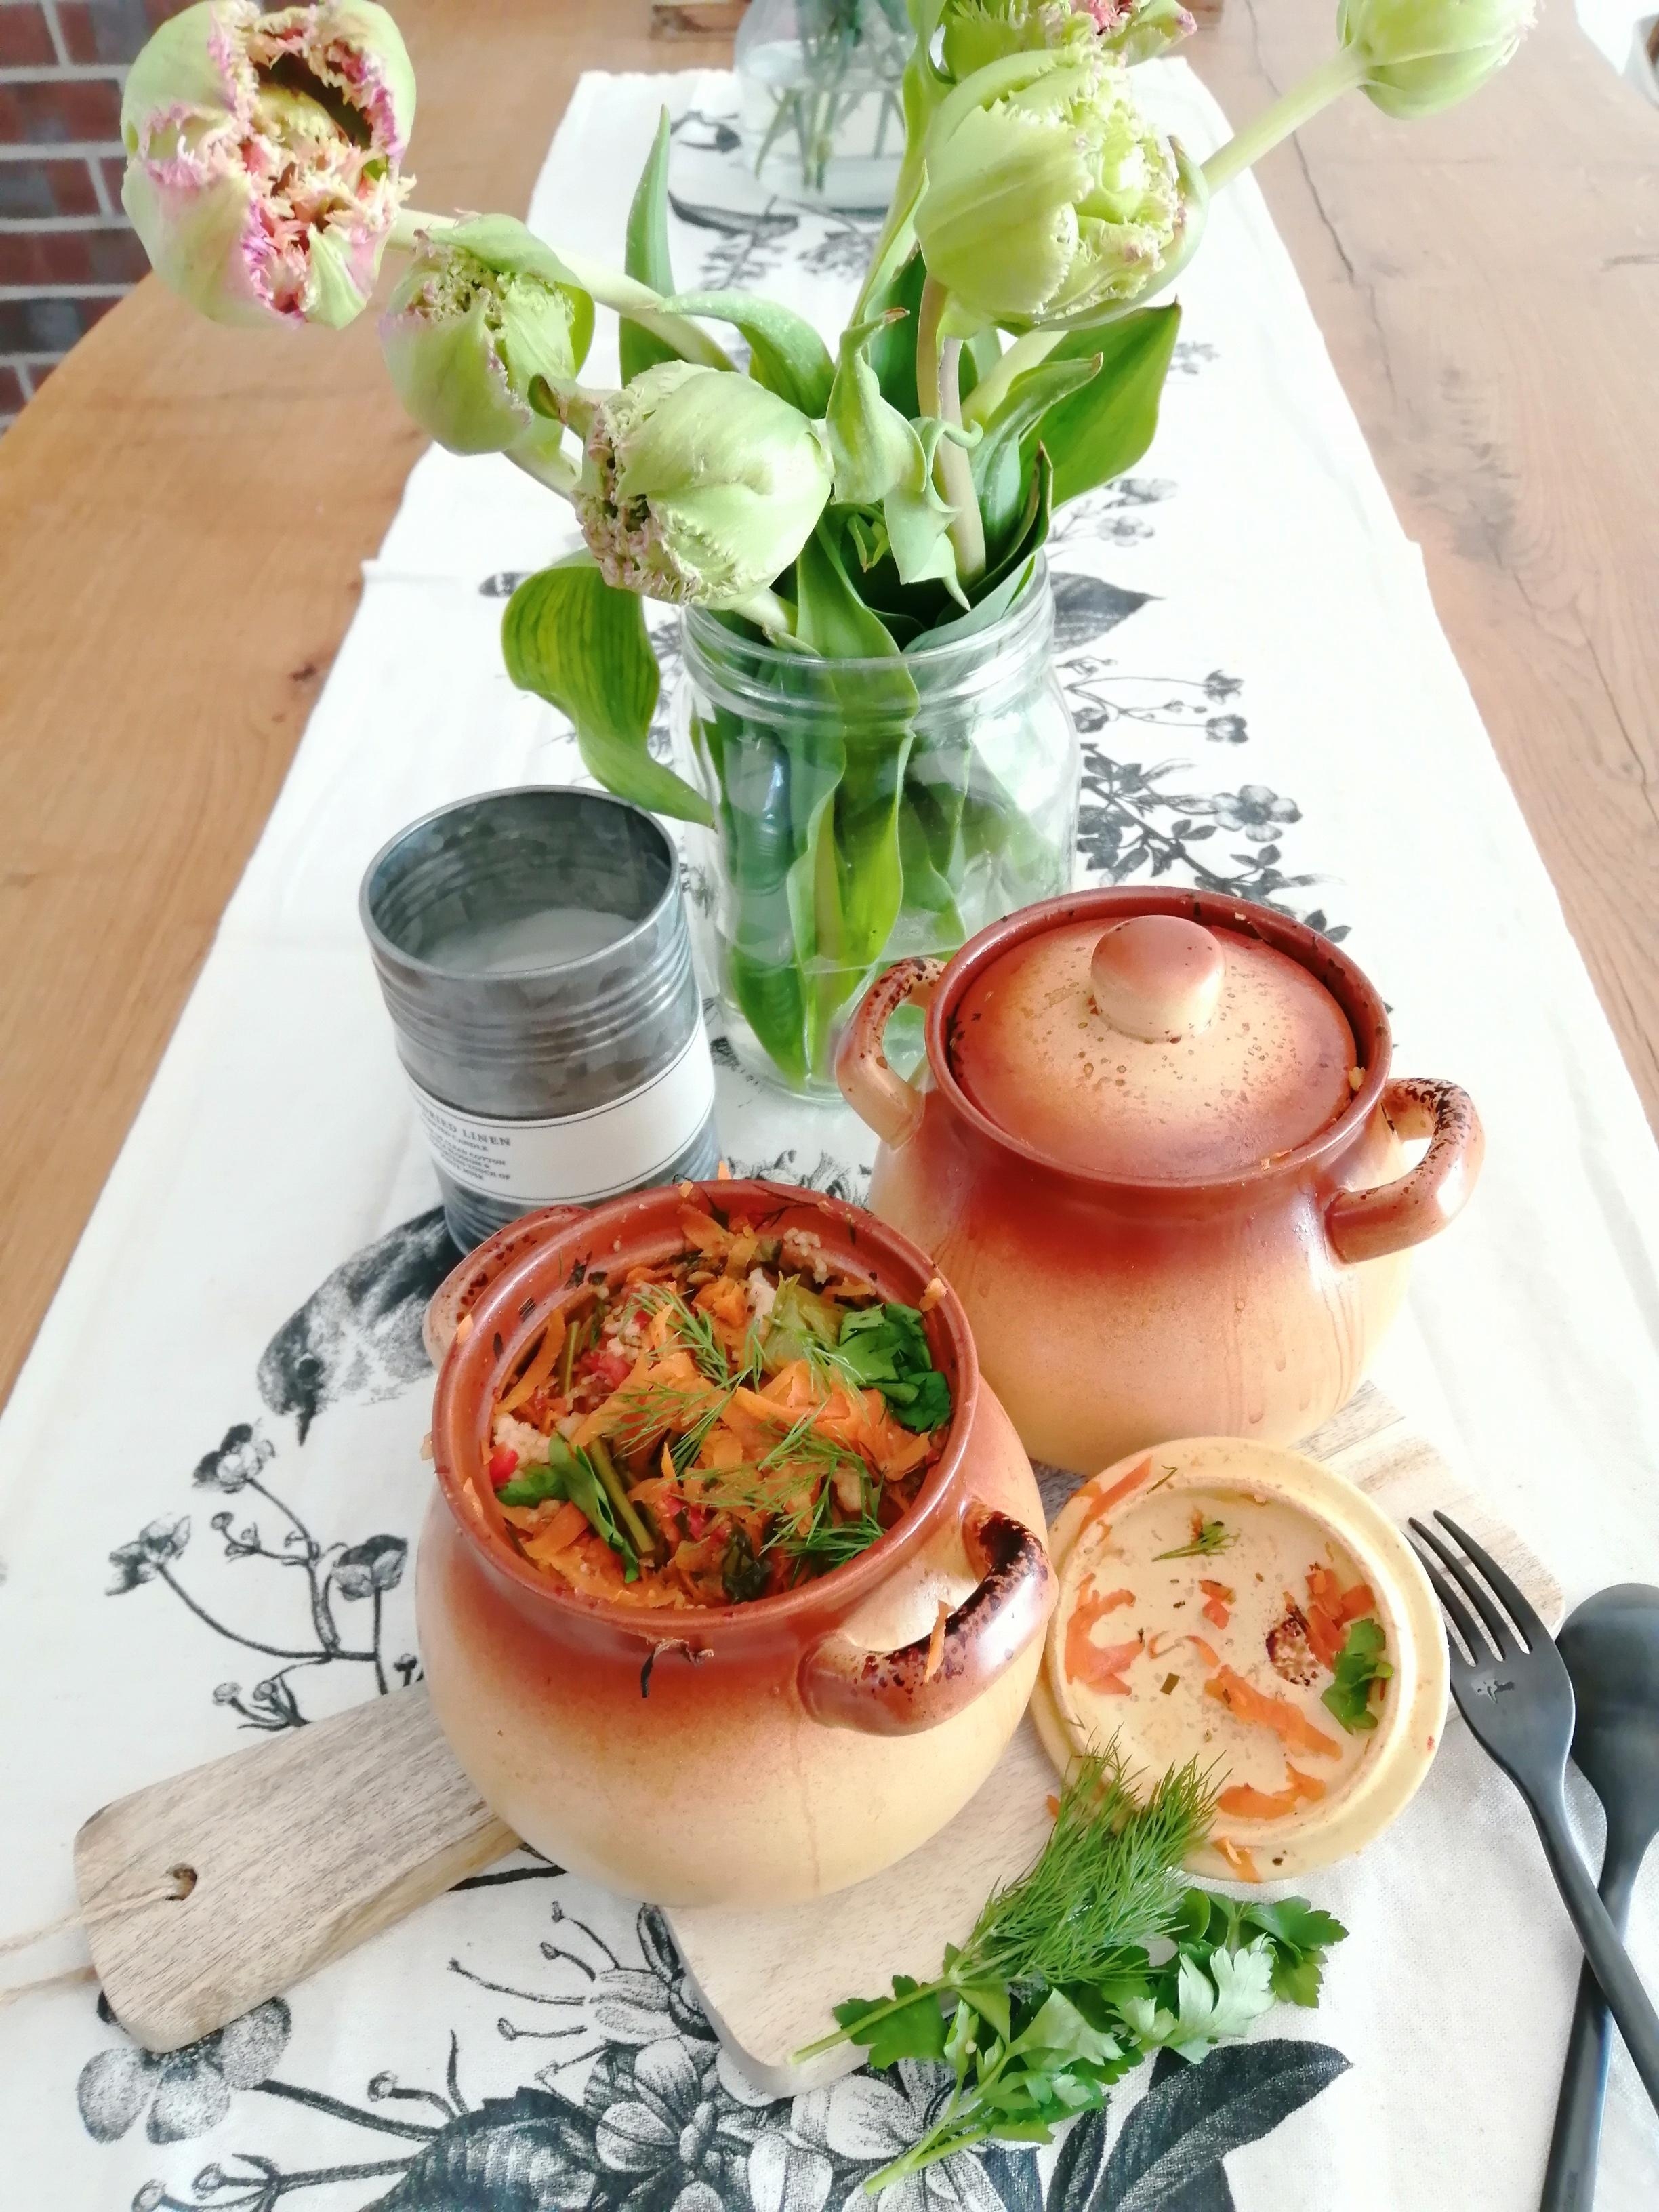 Couscous - Gemüse - Hähnchen aus dem Backofen 😋
#foodlover #tulpenliebe #home #essen #foodpic 